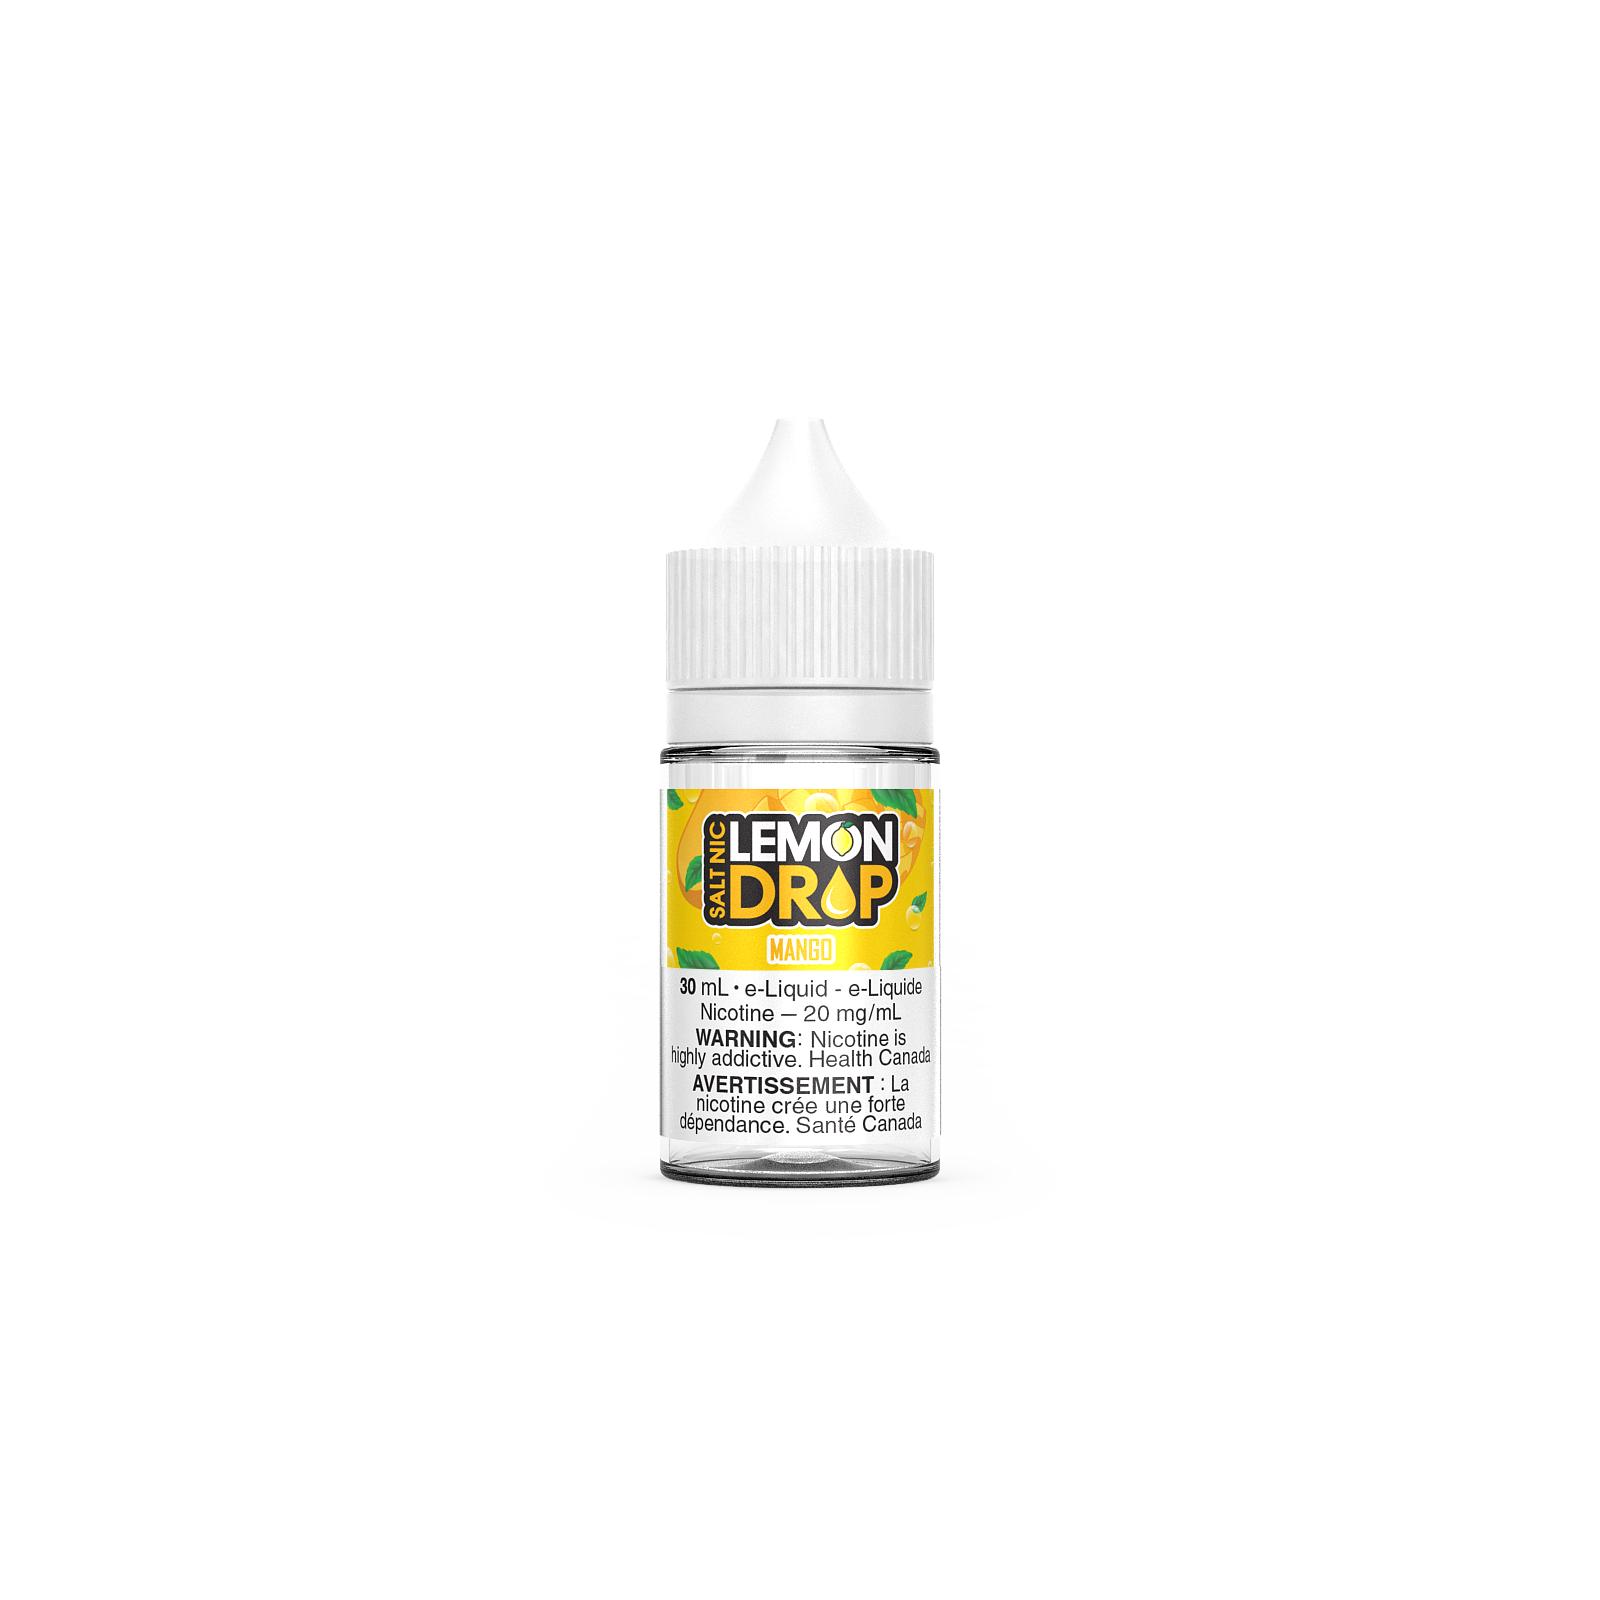 Lemon Drop - SALT - Mango - E-Liquid